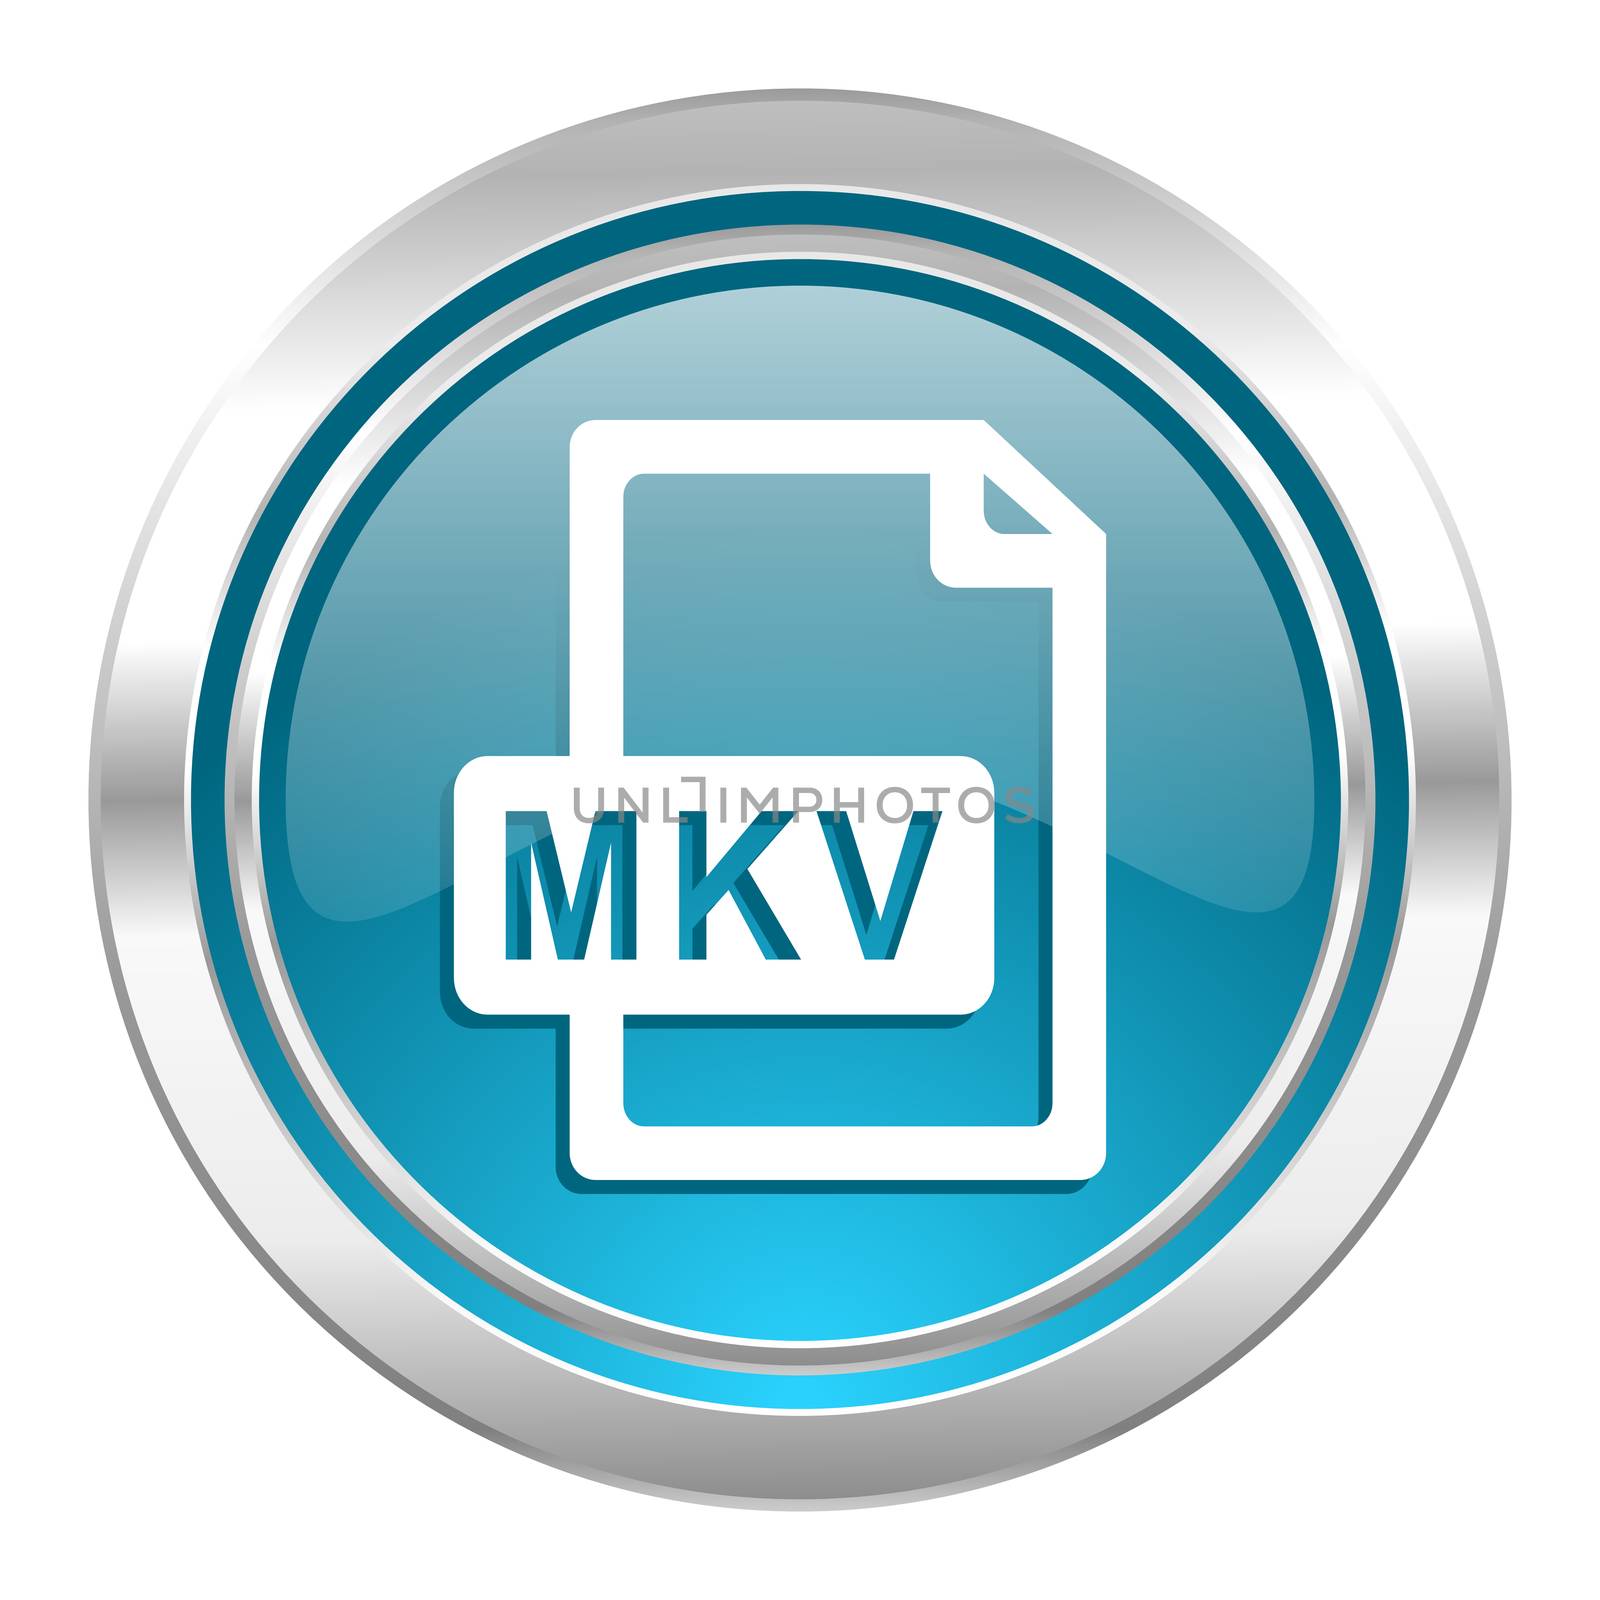 mkv file icon by alexwhite